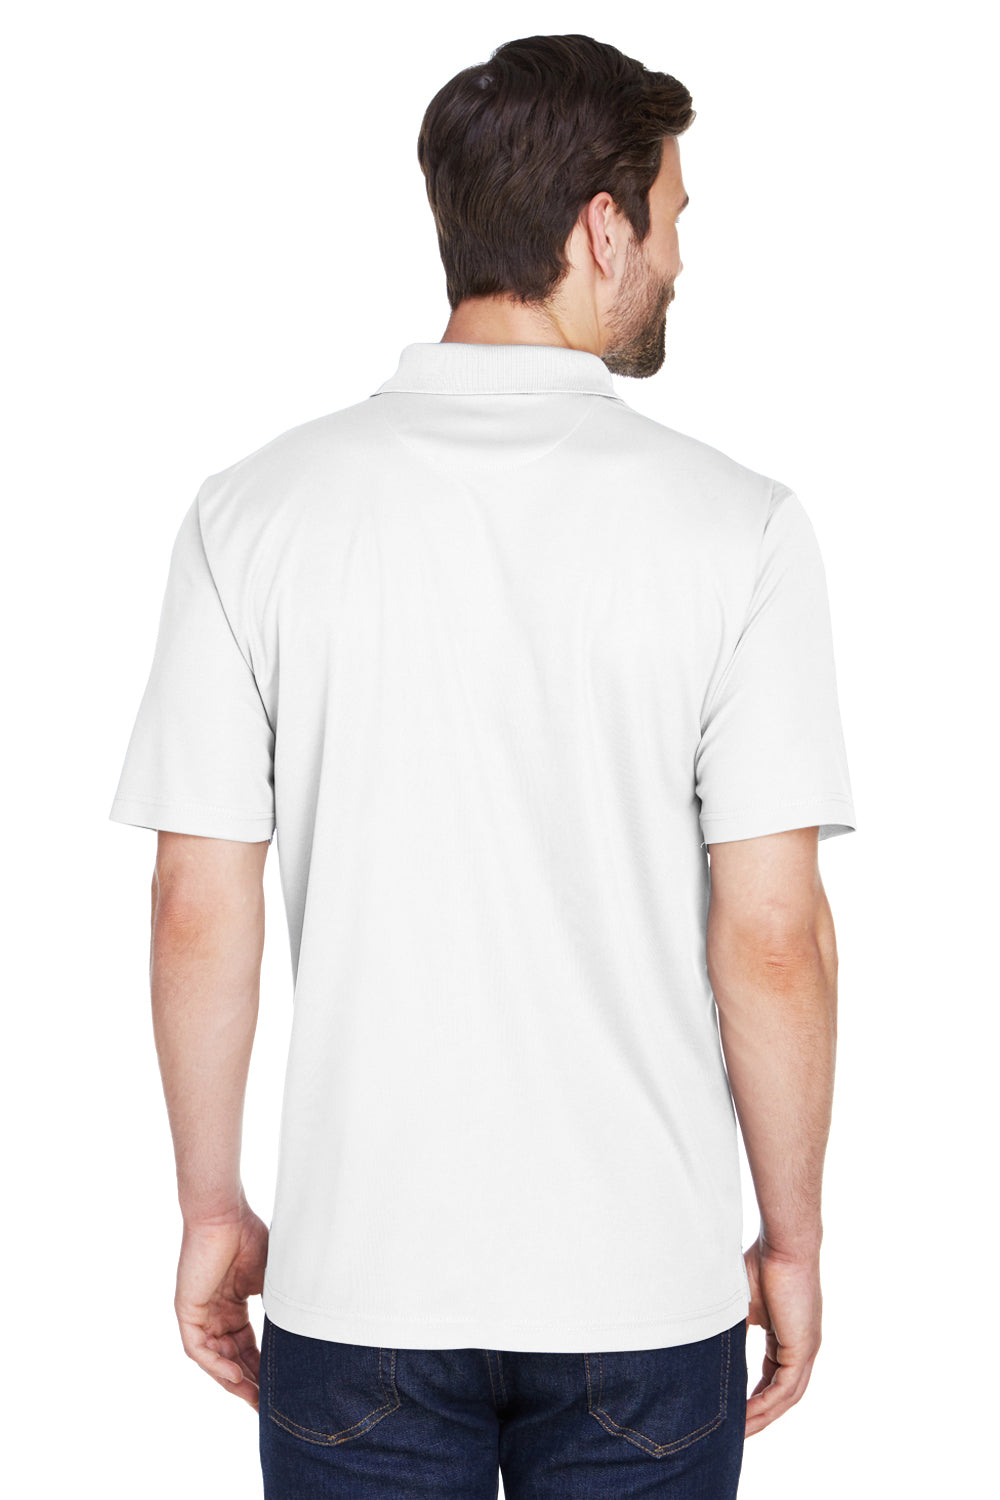 UltraClub 8210 Mens Cool & Dry Moisture Wicking Short Sleeve Polo Shirt White Back